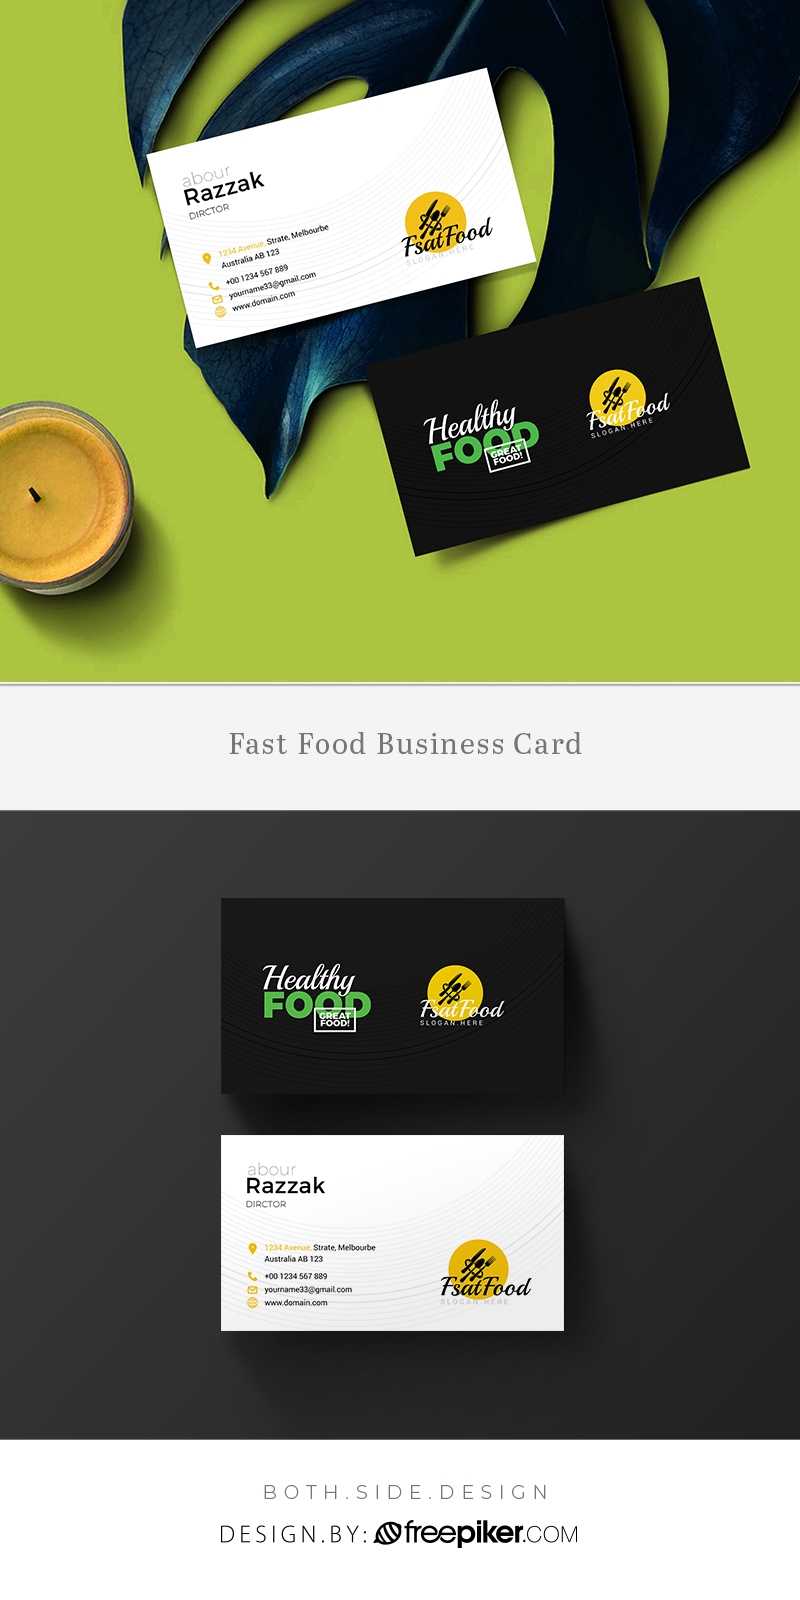 Freepiker | Food And Restaurant Business Card Template Inside Food Business Cards Templates Free